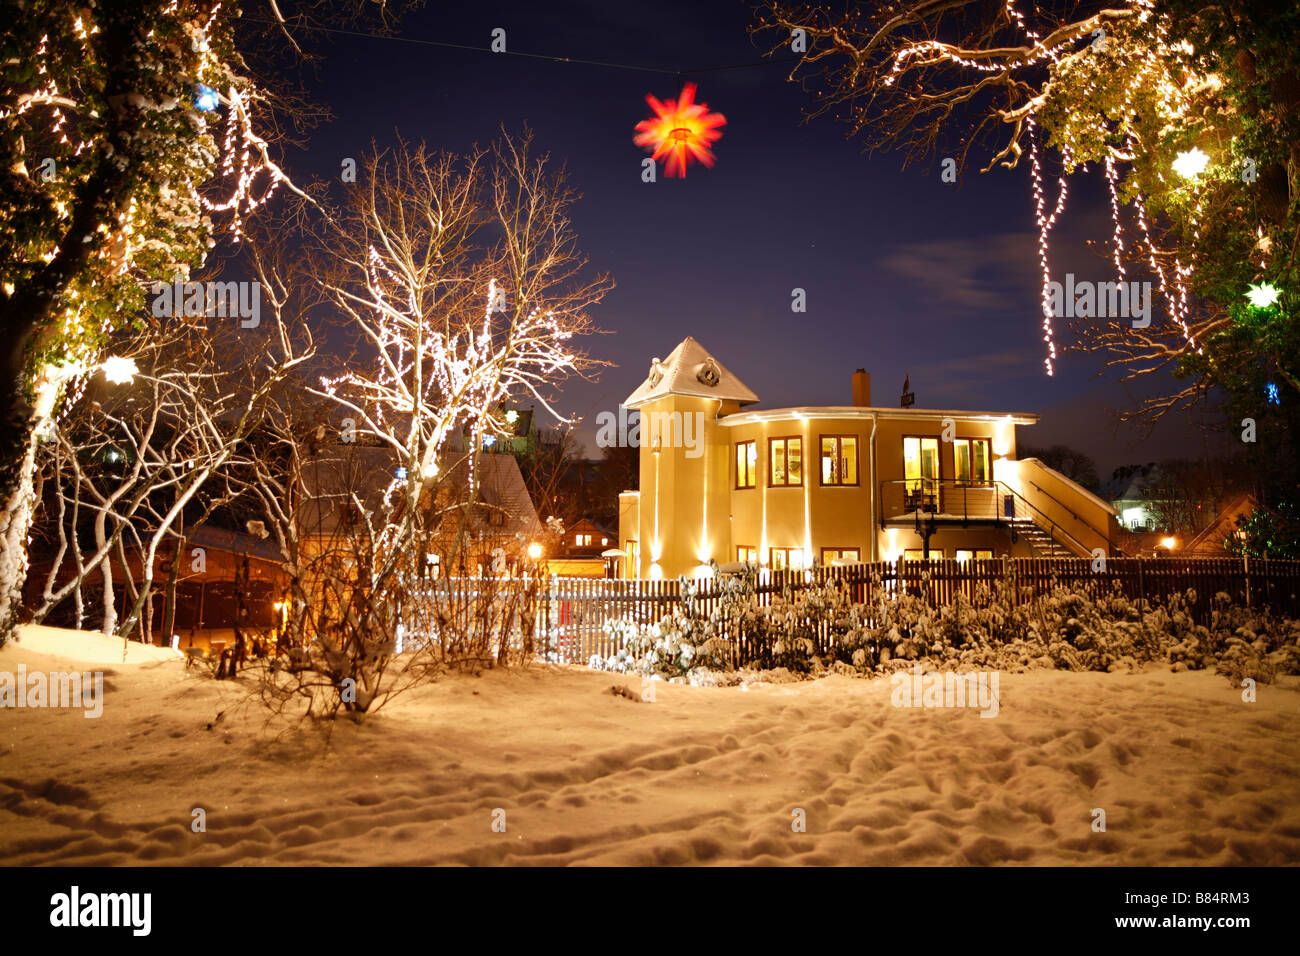 christmas illumination outside of the restaurant Objekt 5 in Halle (Saale), Germany Stock Photo